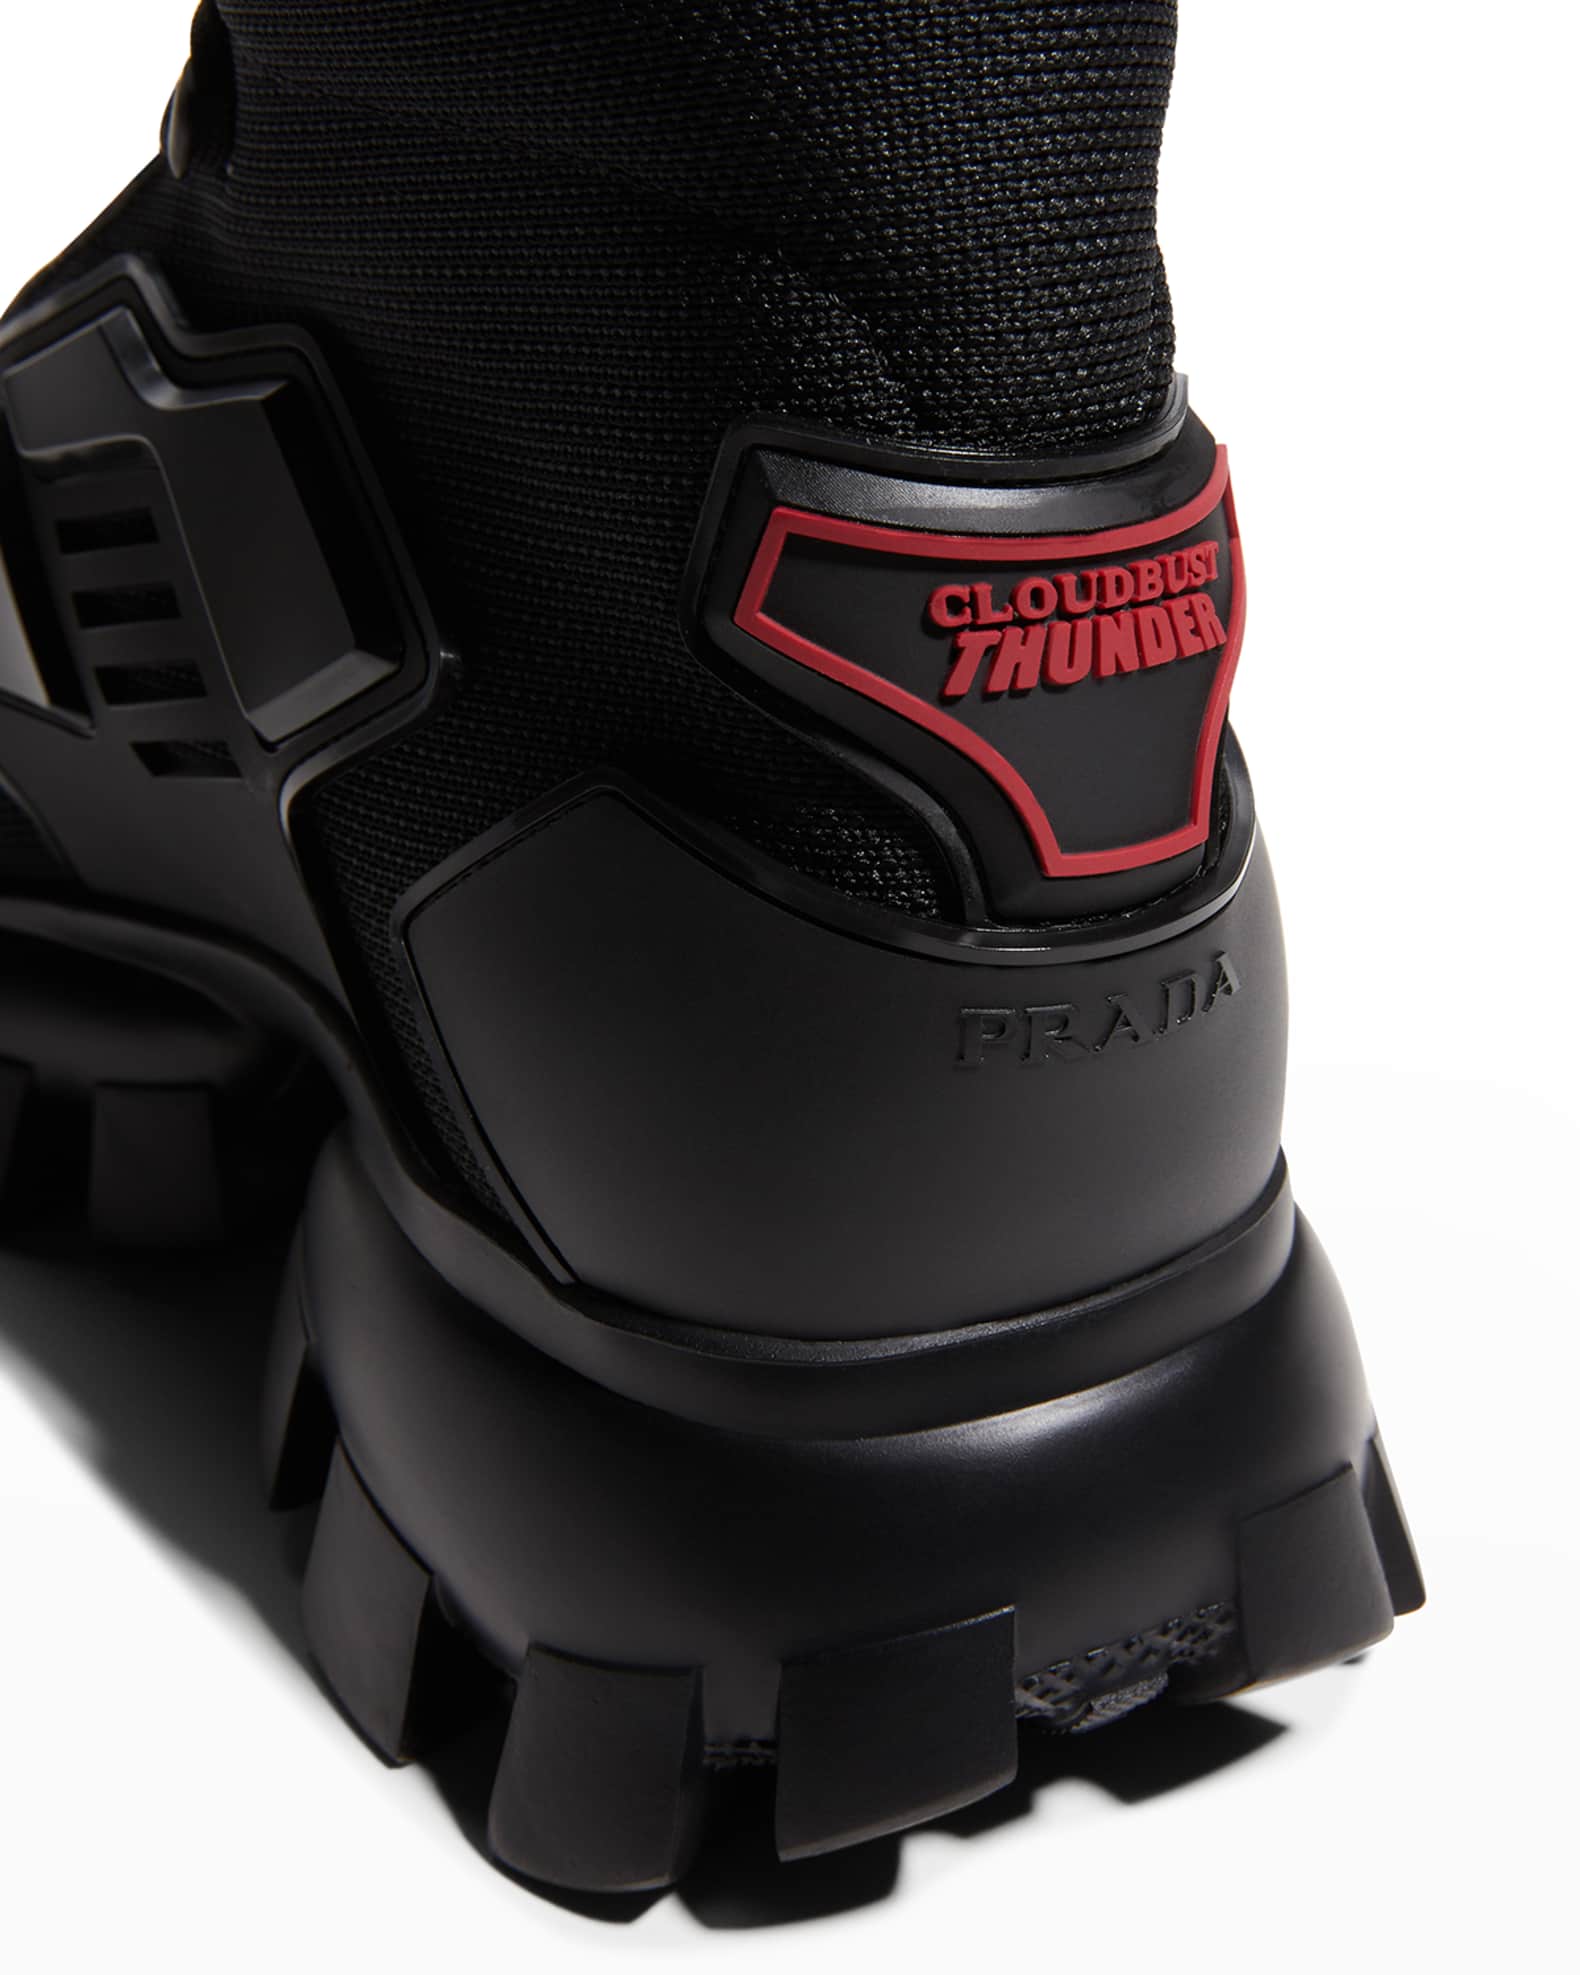 Prada Men's Cloudbust Thunder High-Tech Sneakers